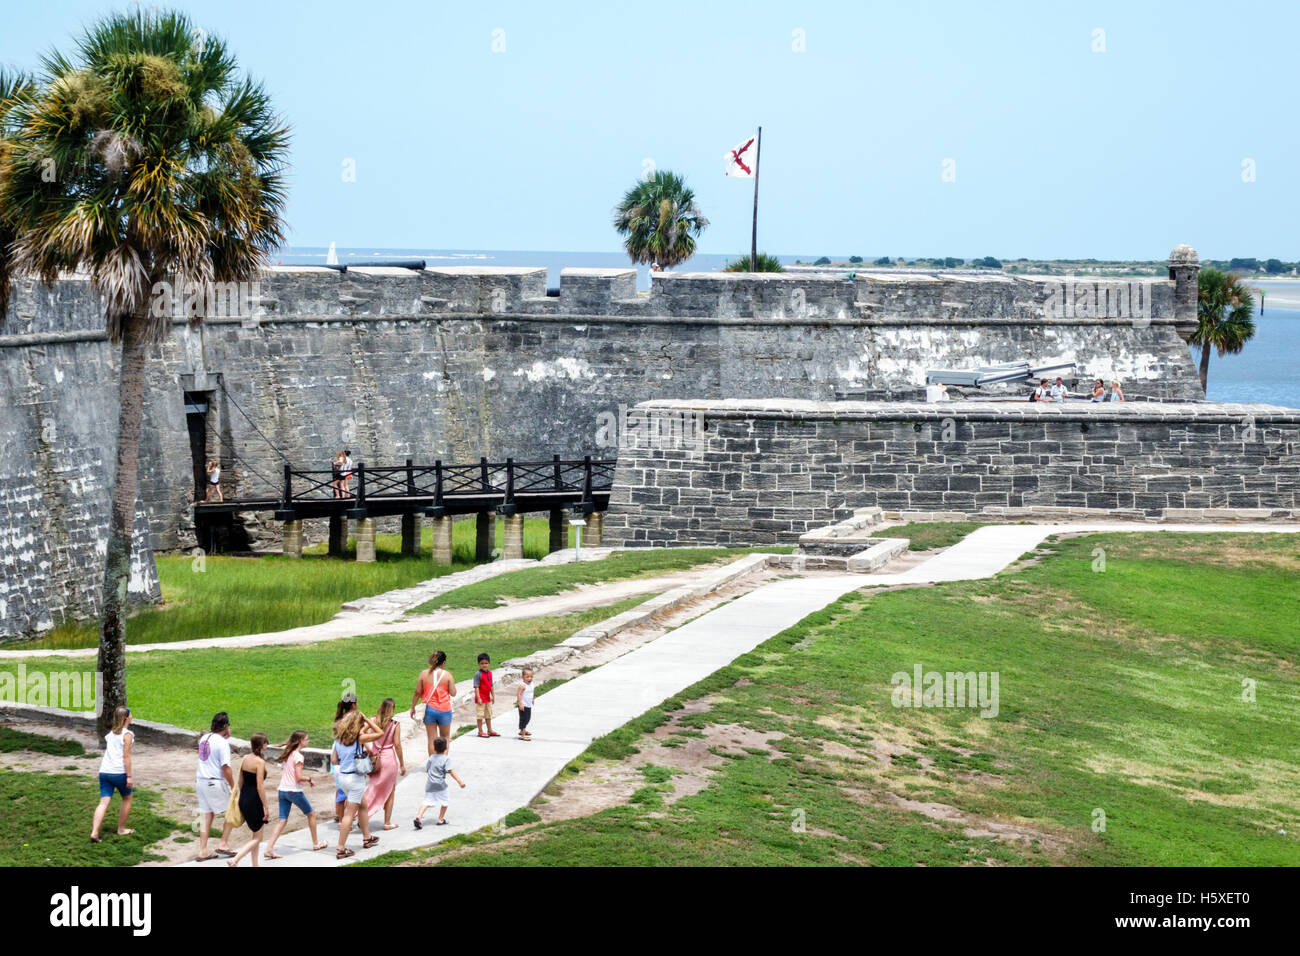 St. Saint Augustine Florida,Castillo de San Marcos National Monument,historic fort,coquina masonry,wall,FL160802071 Stock Photo